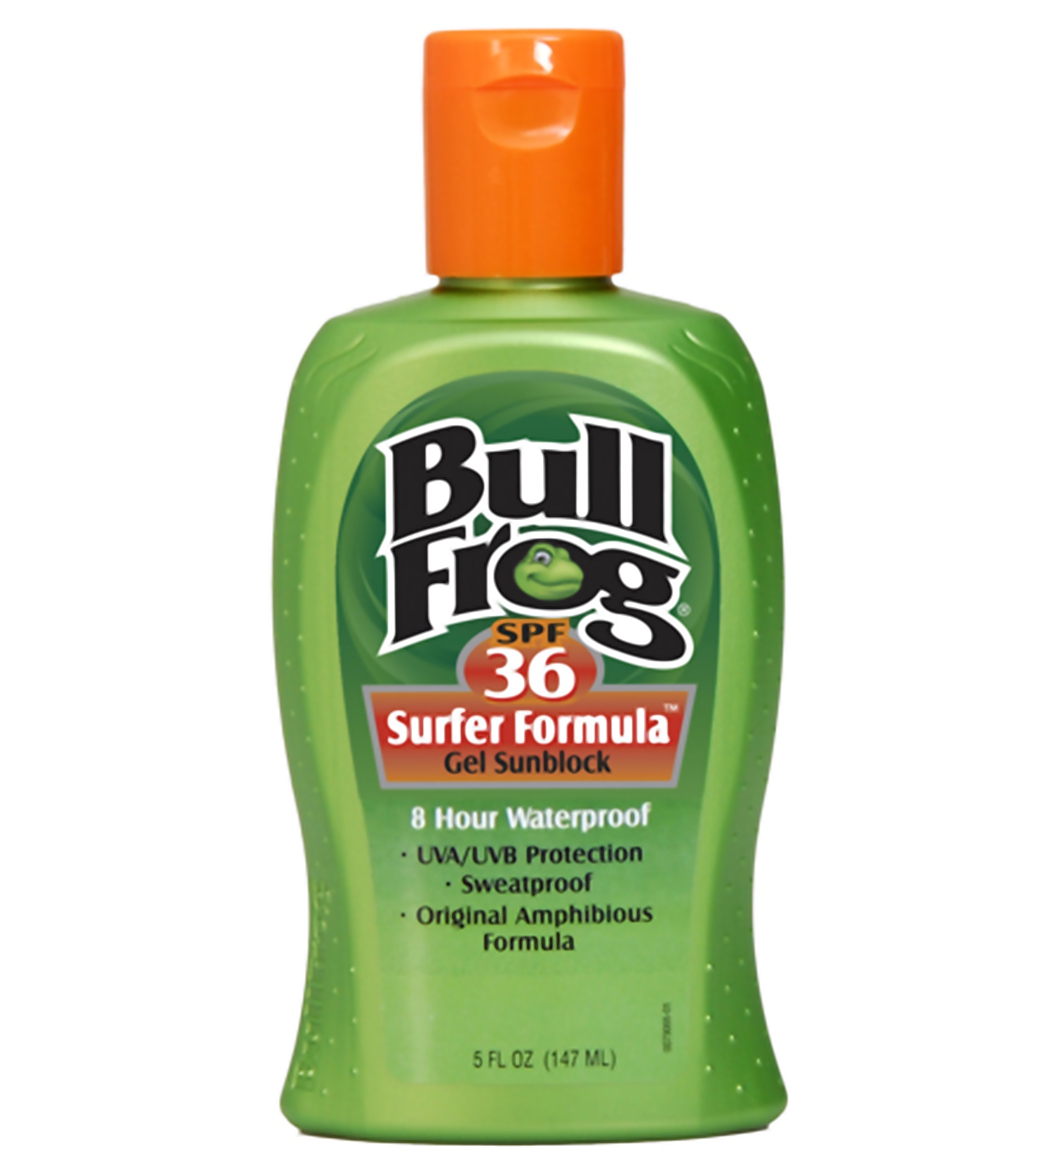 bullfrog sunscreen surfer formula